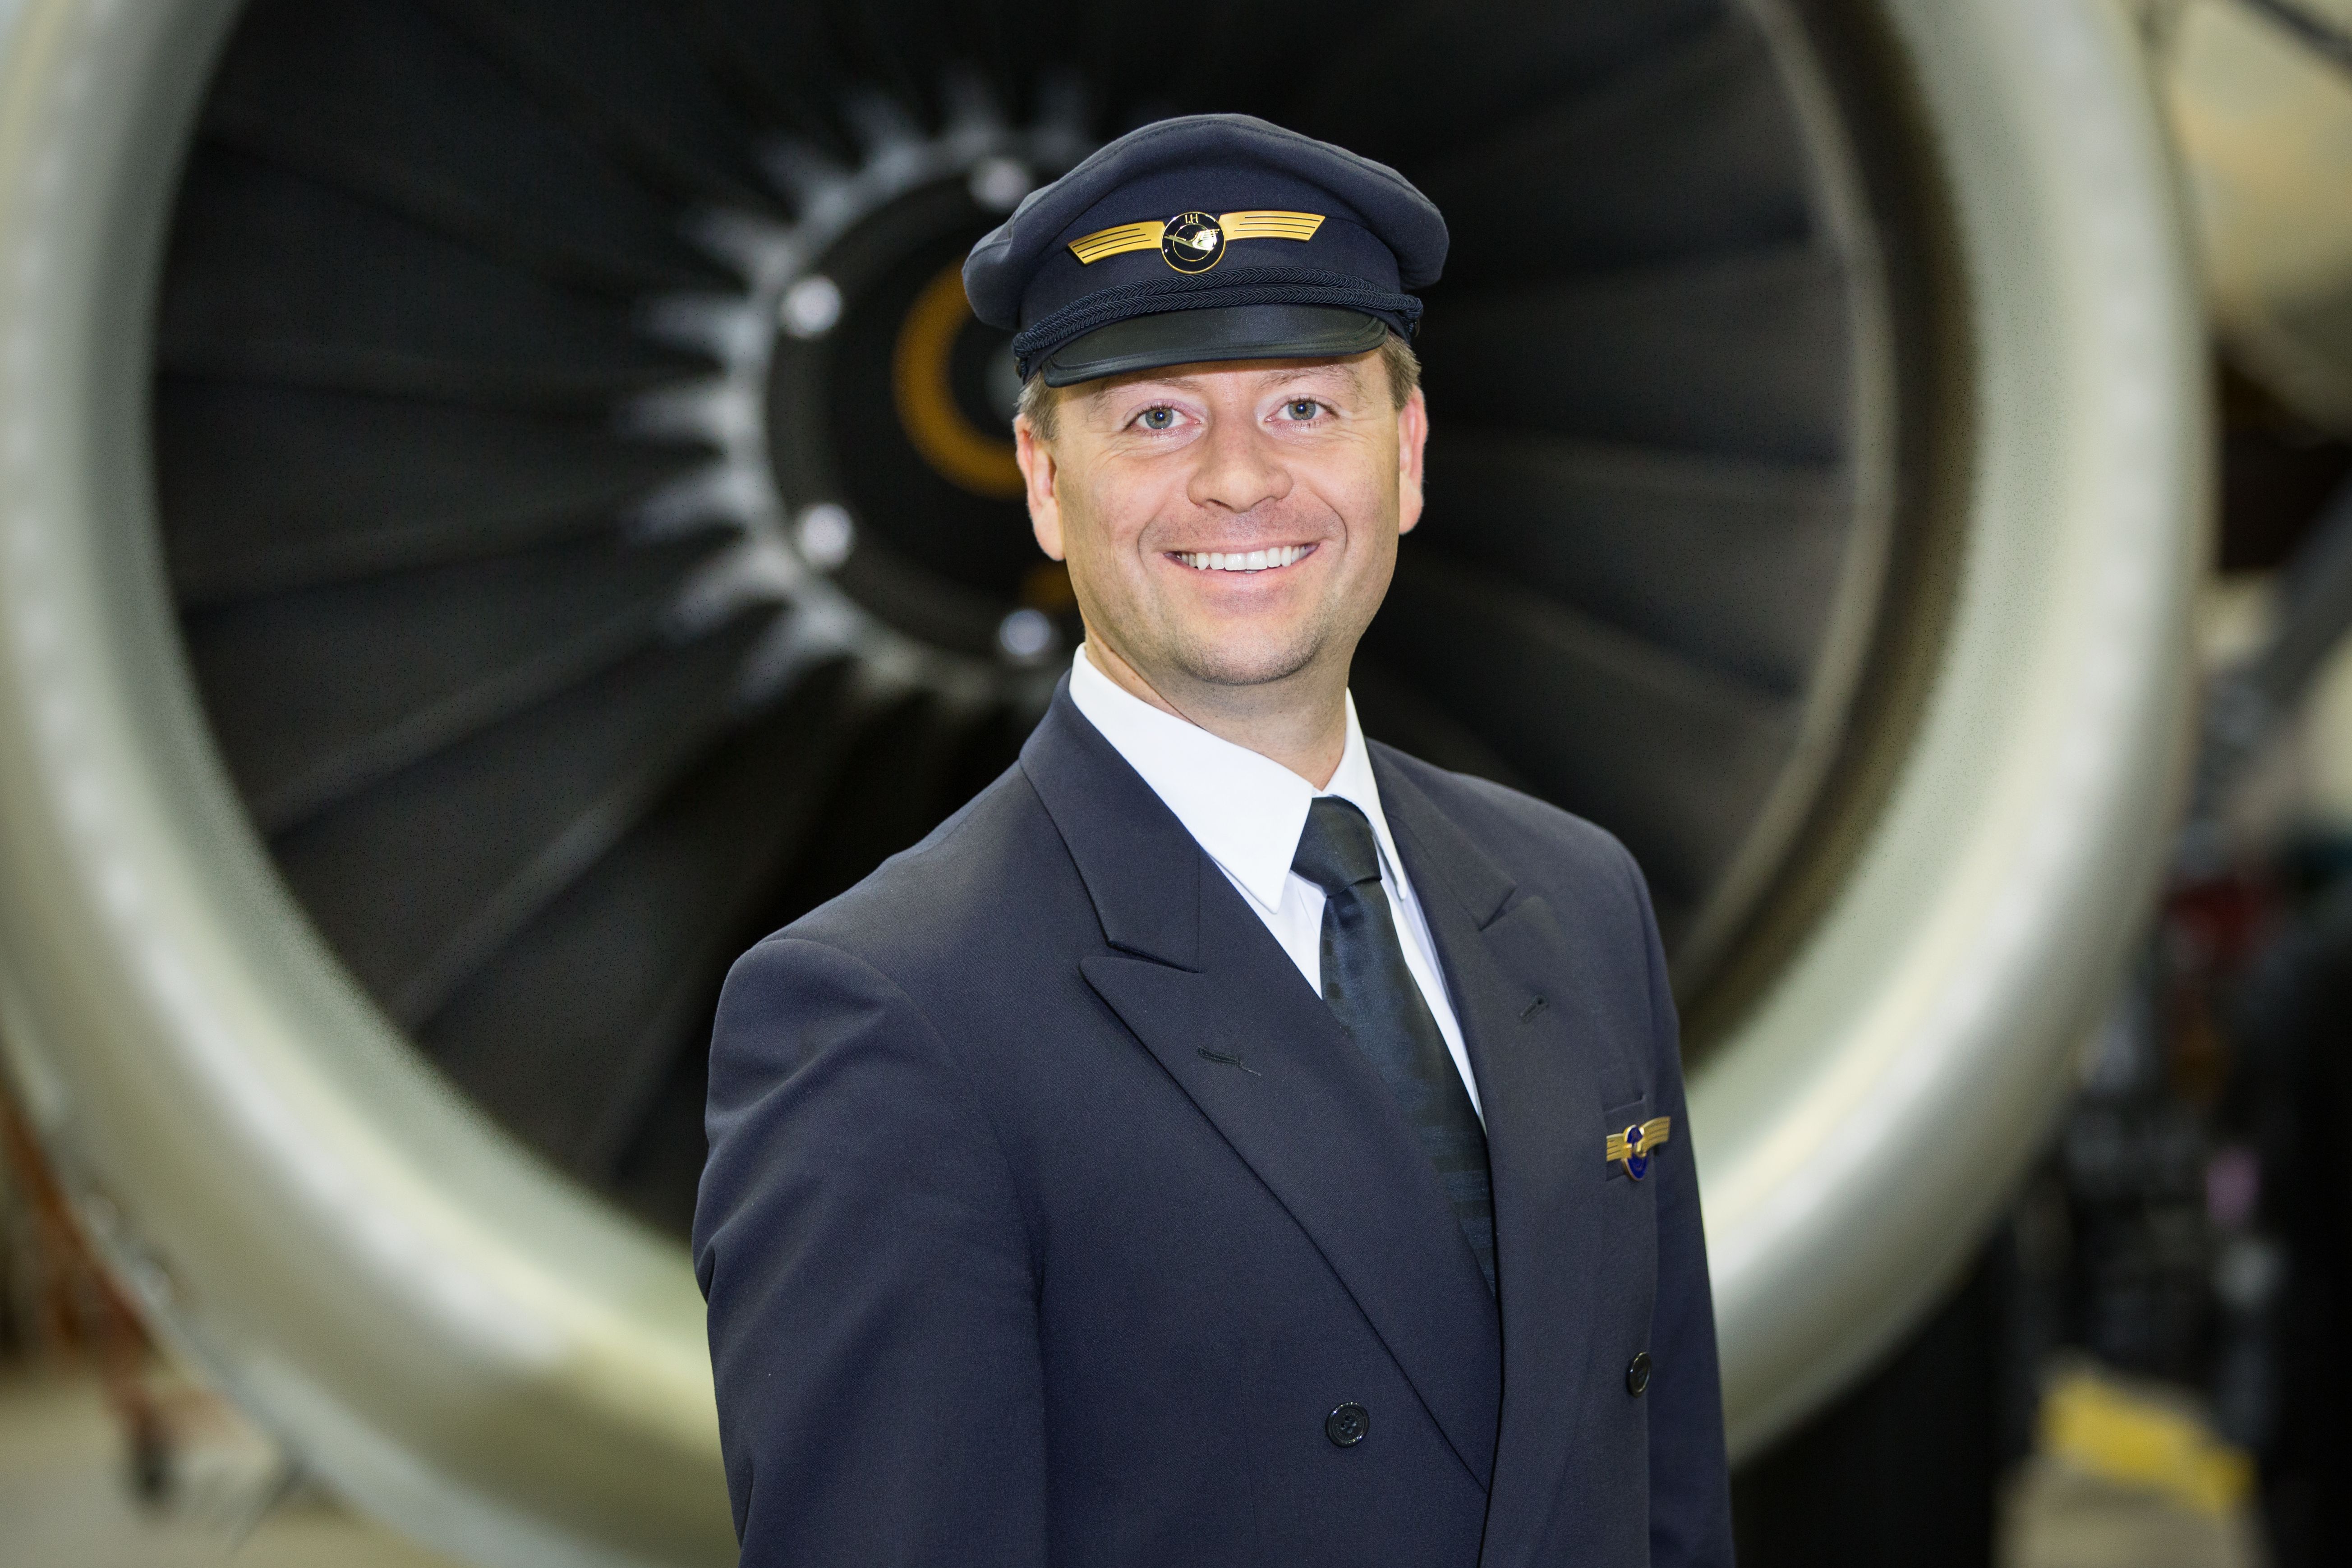 151118 Lufthansa pilot in front of jet engine